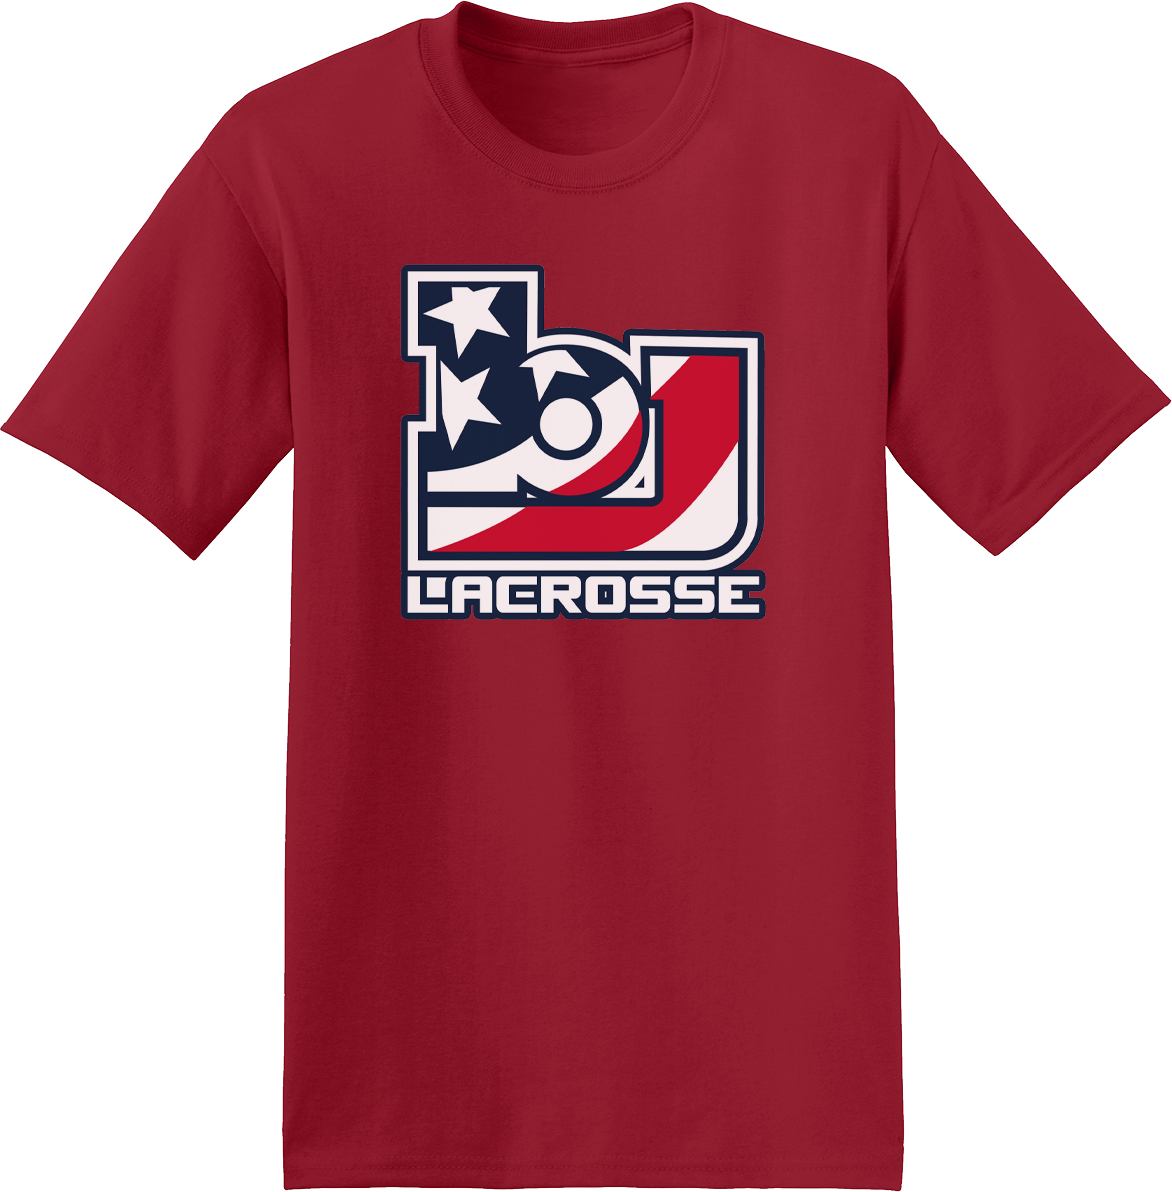 Bob Jones Lacrosse Red T-Shirt